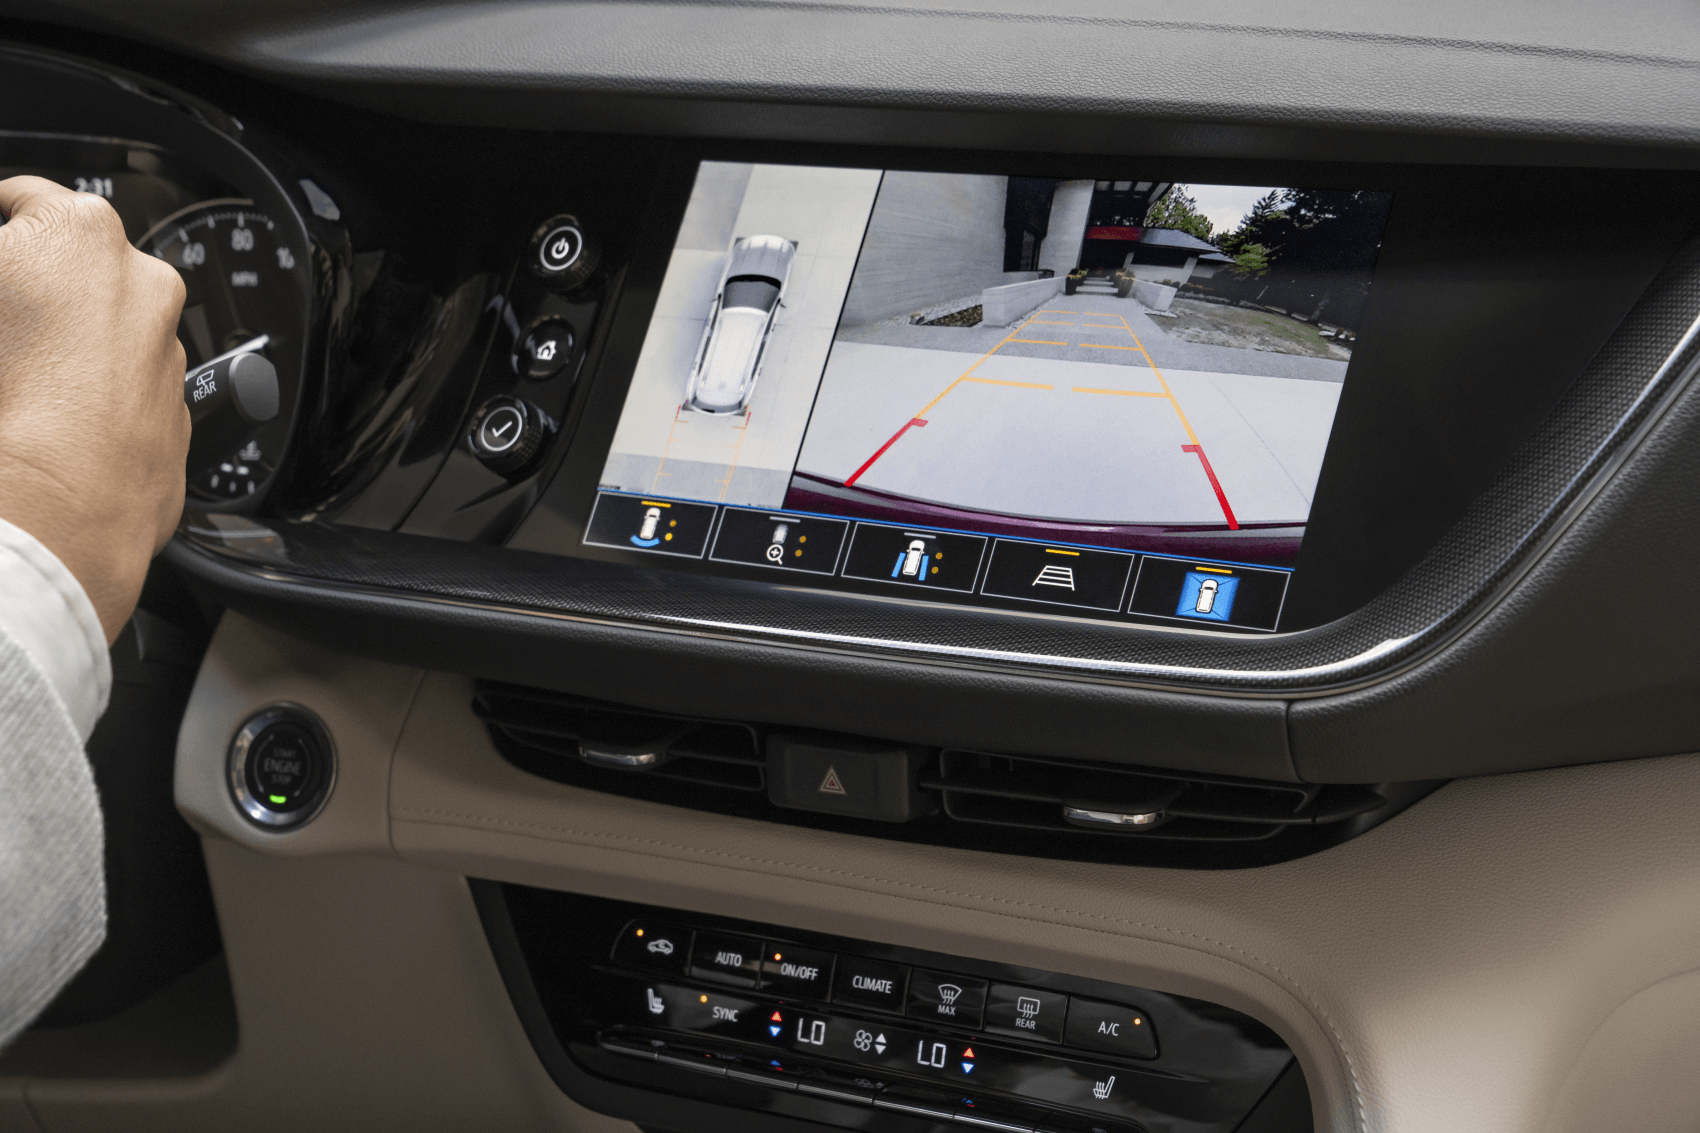 2021 Buick Envision Safety HD Rear Vision Camera